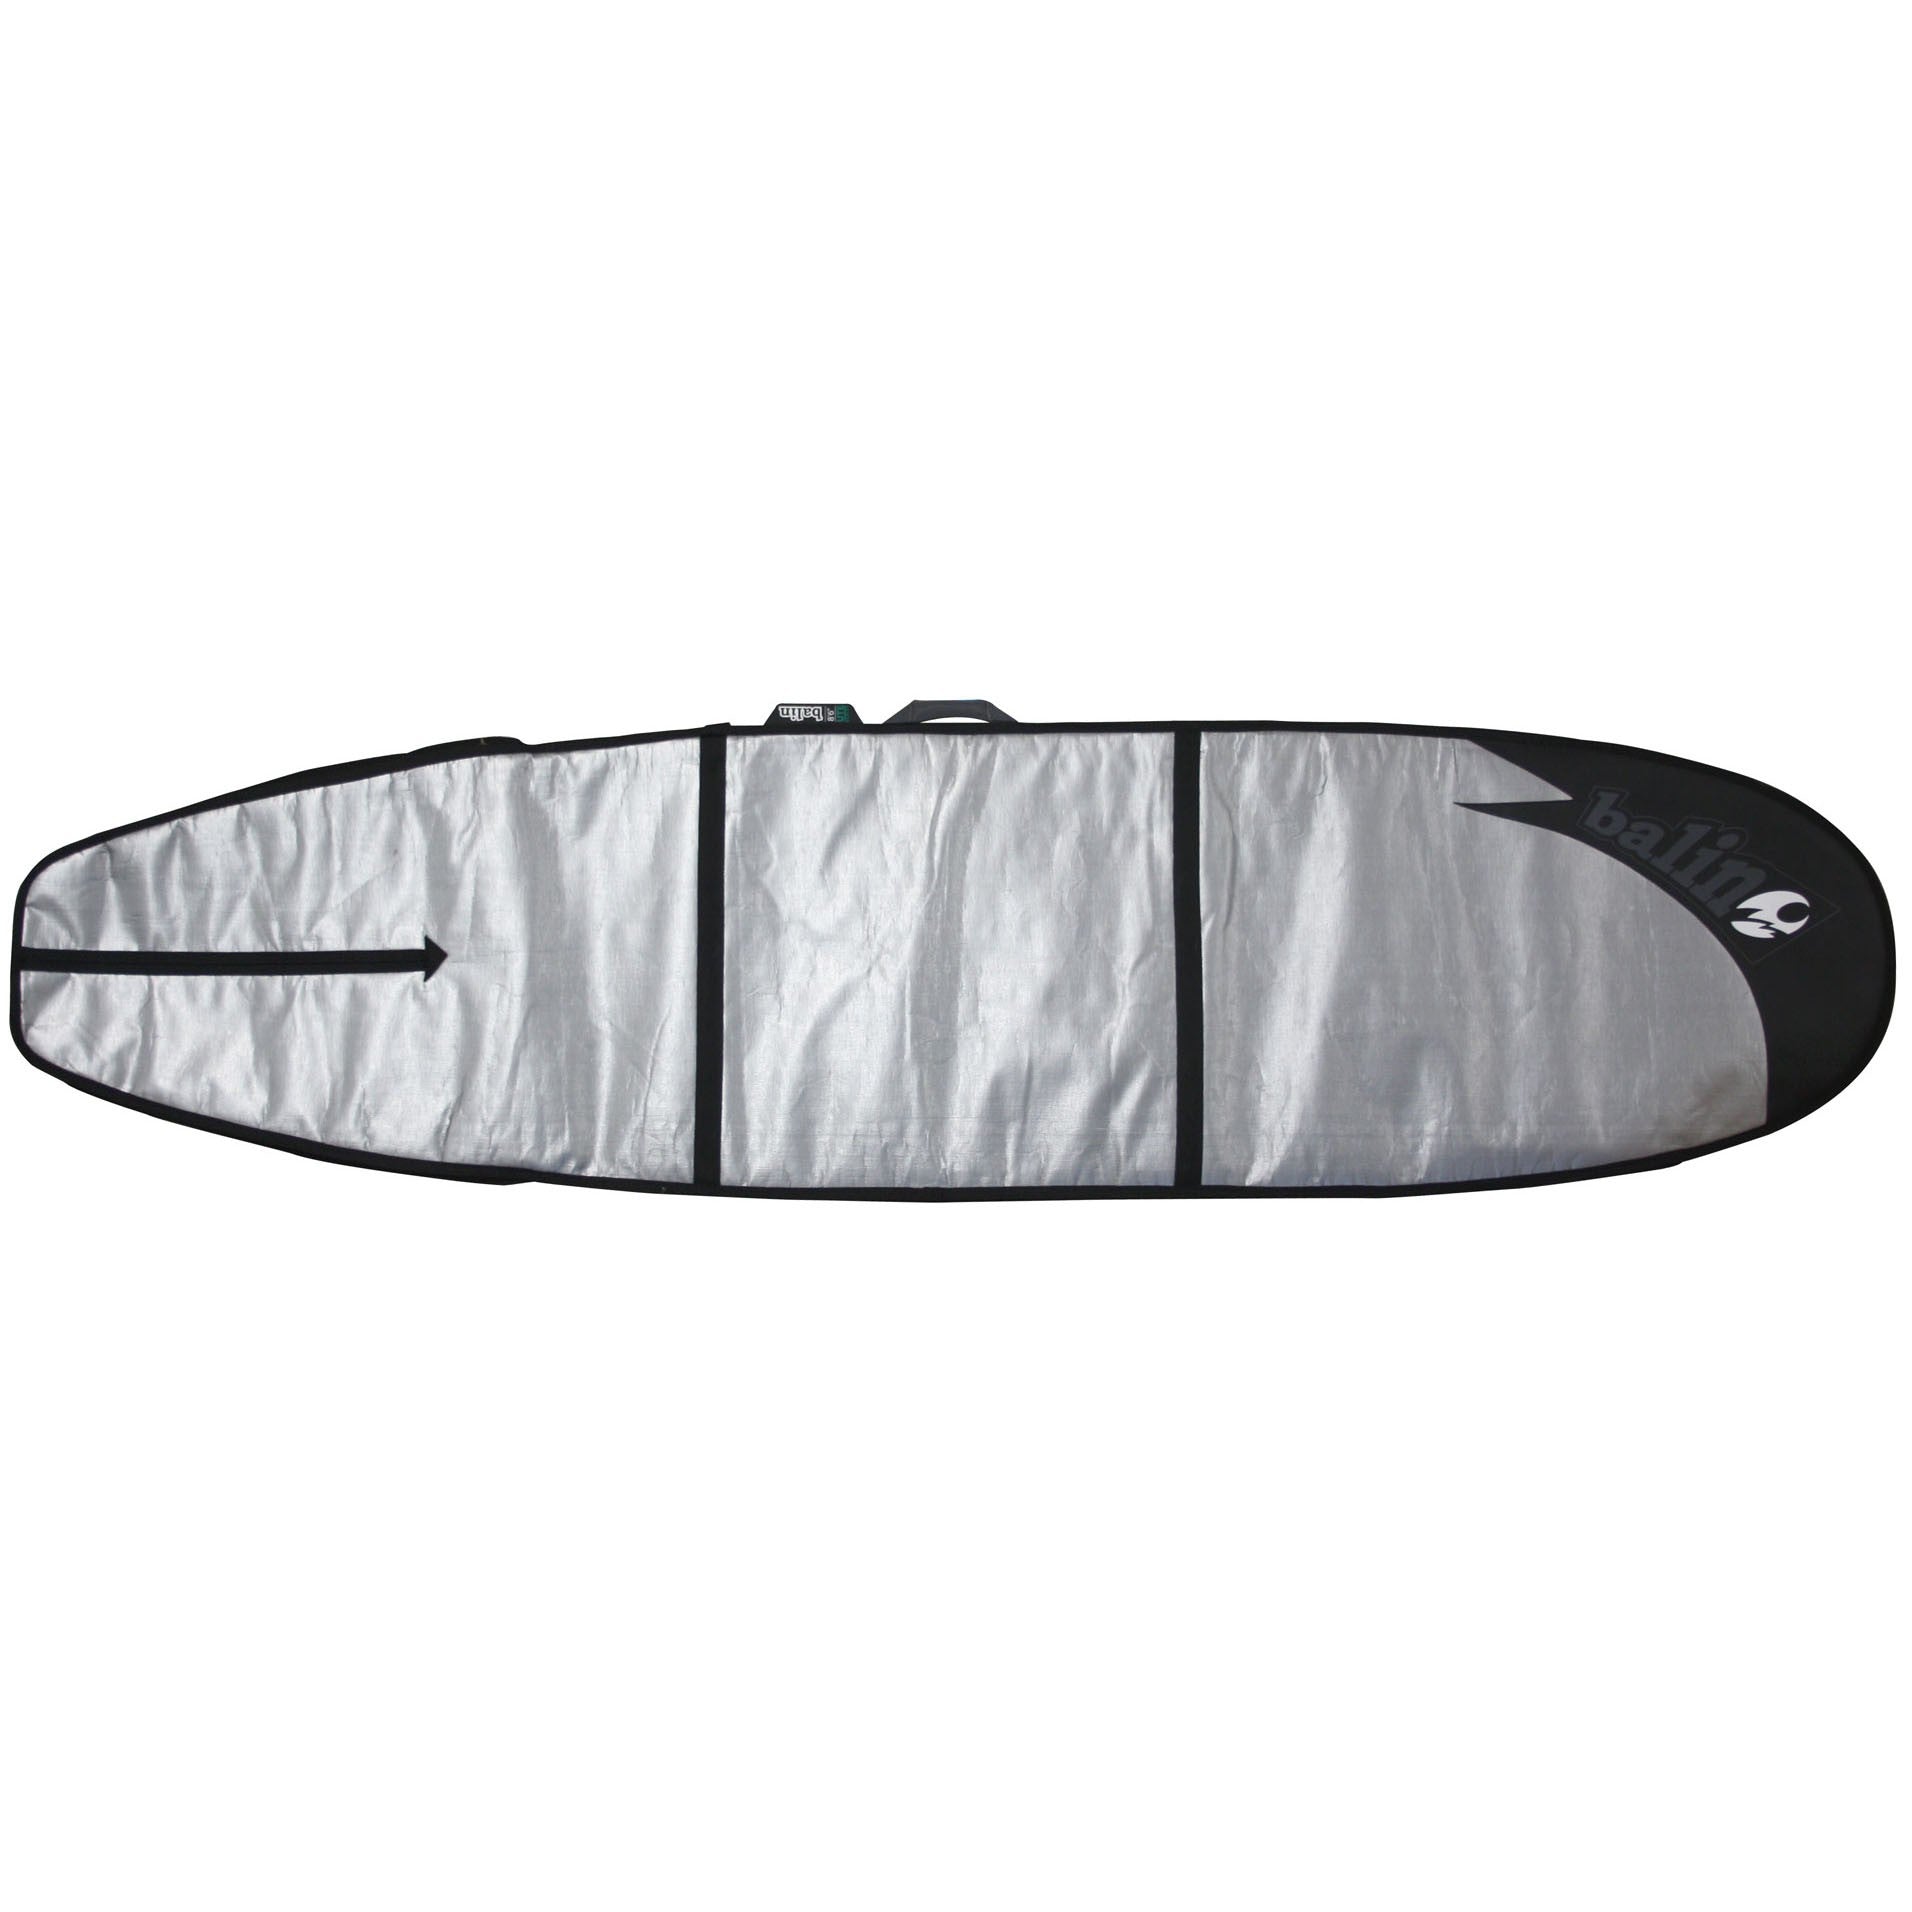 BALIN - 1 board travel cover - UTE 8'1 Longboard 5mm - Gray